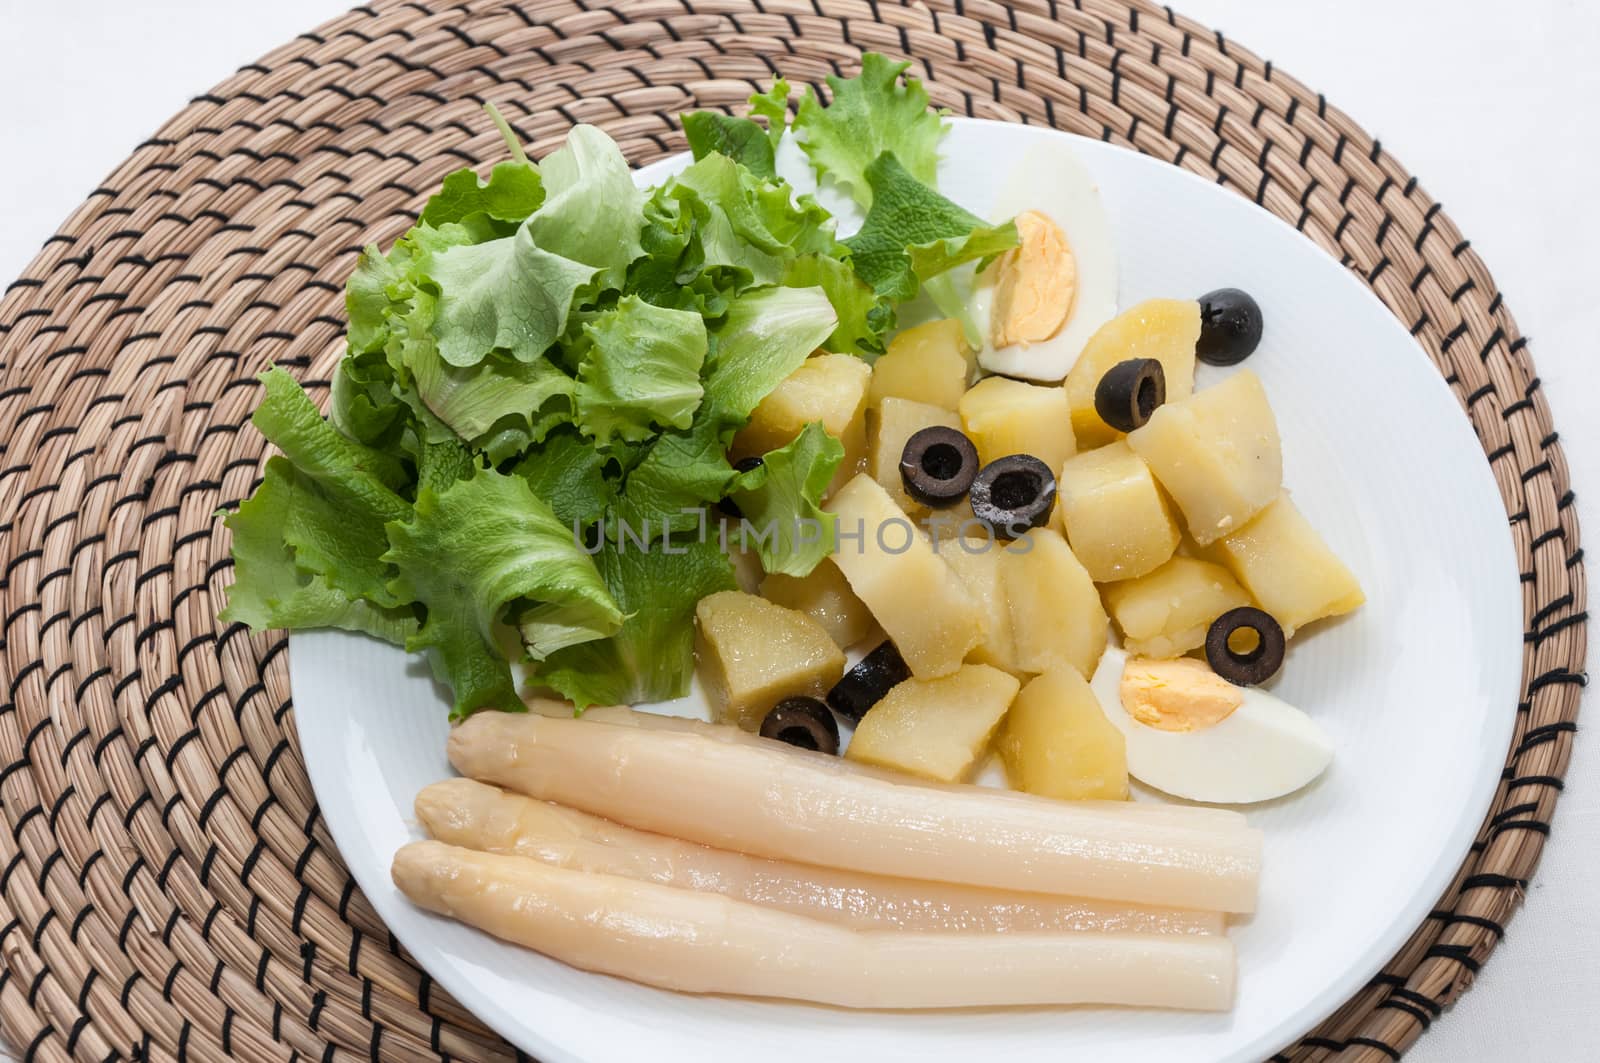 Potato salad and various ingredients by Mariamarmar